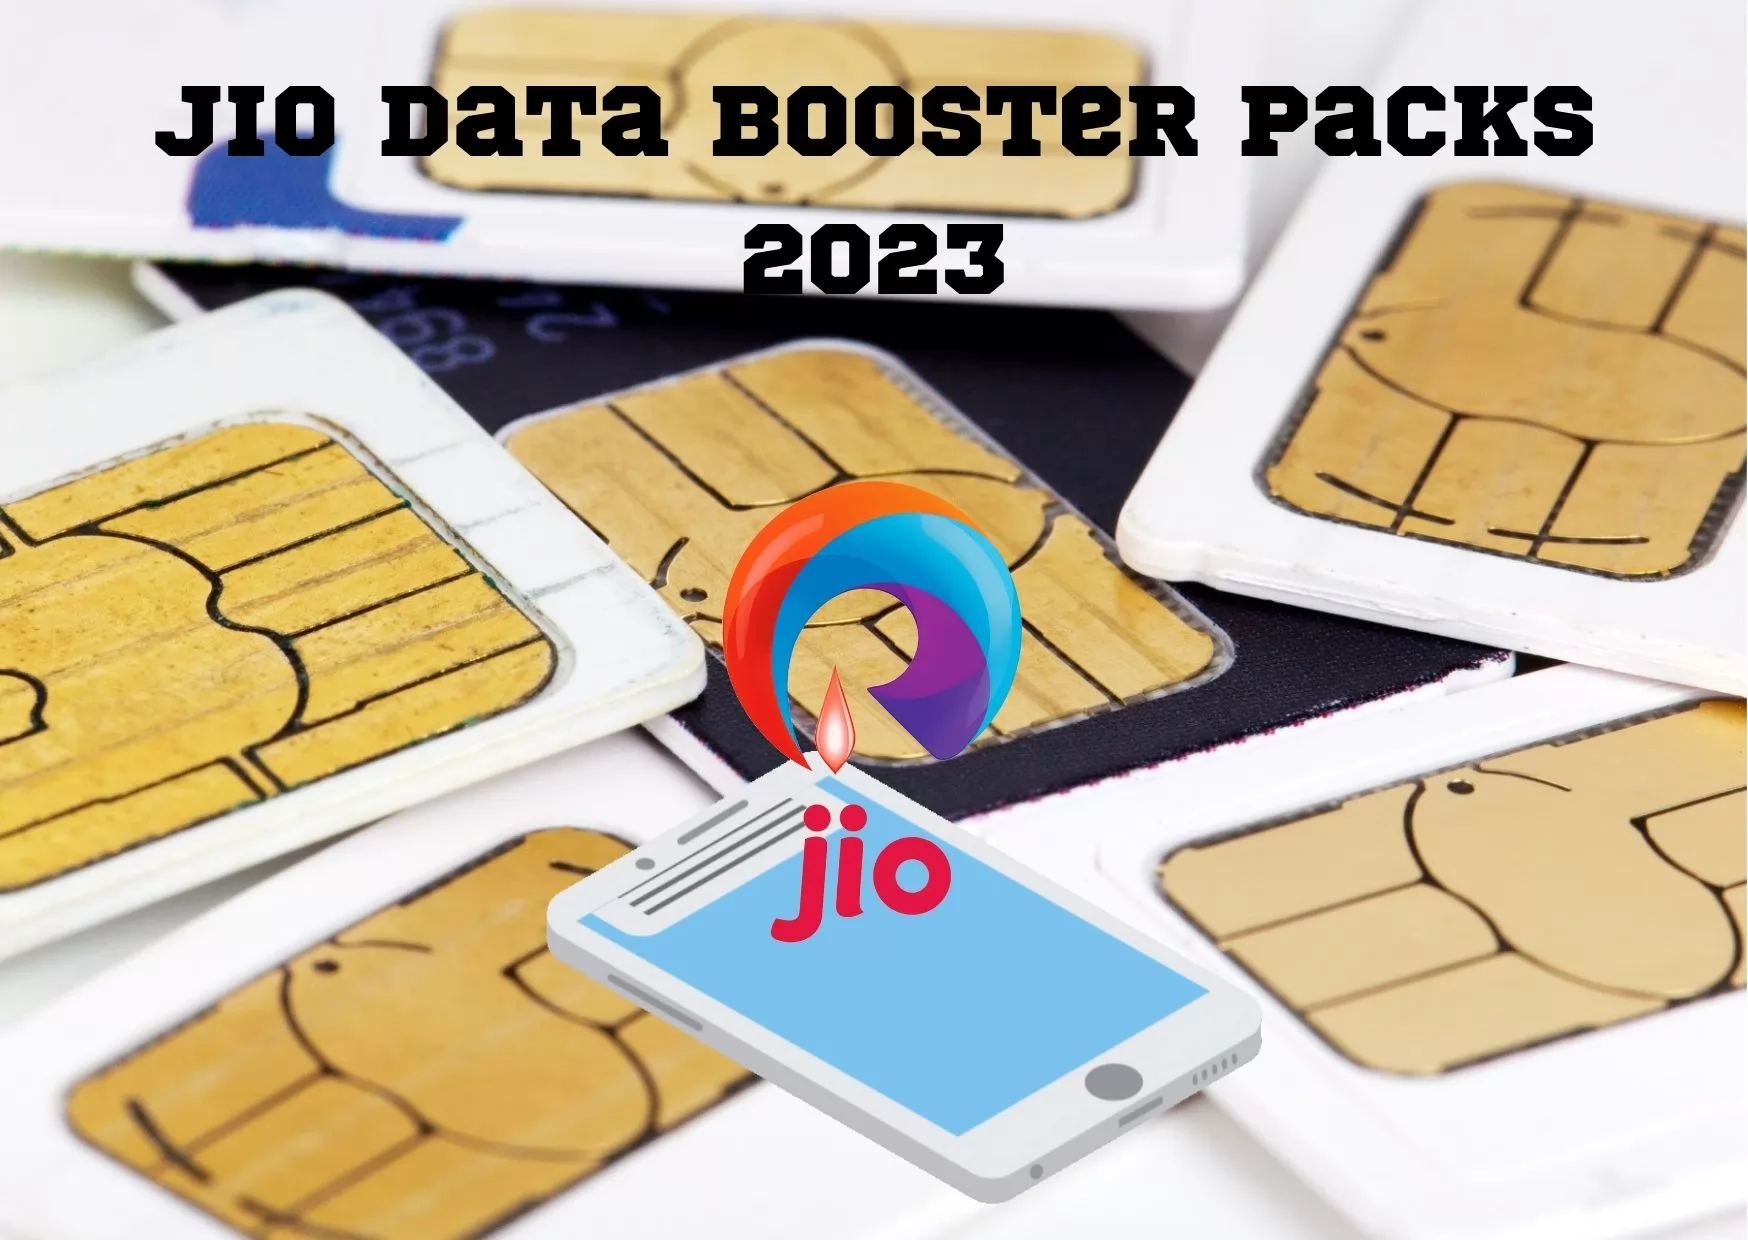 Jio Data Booster Packs Price